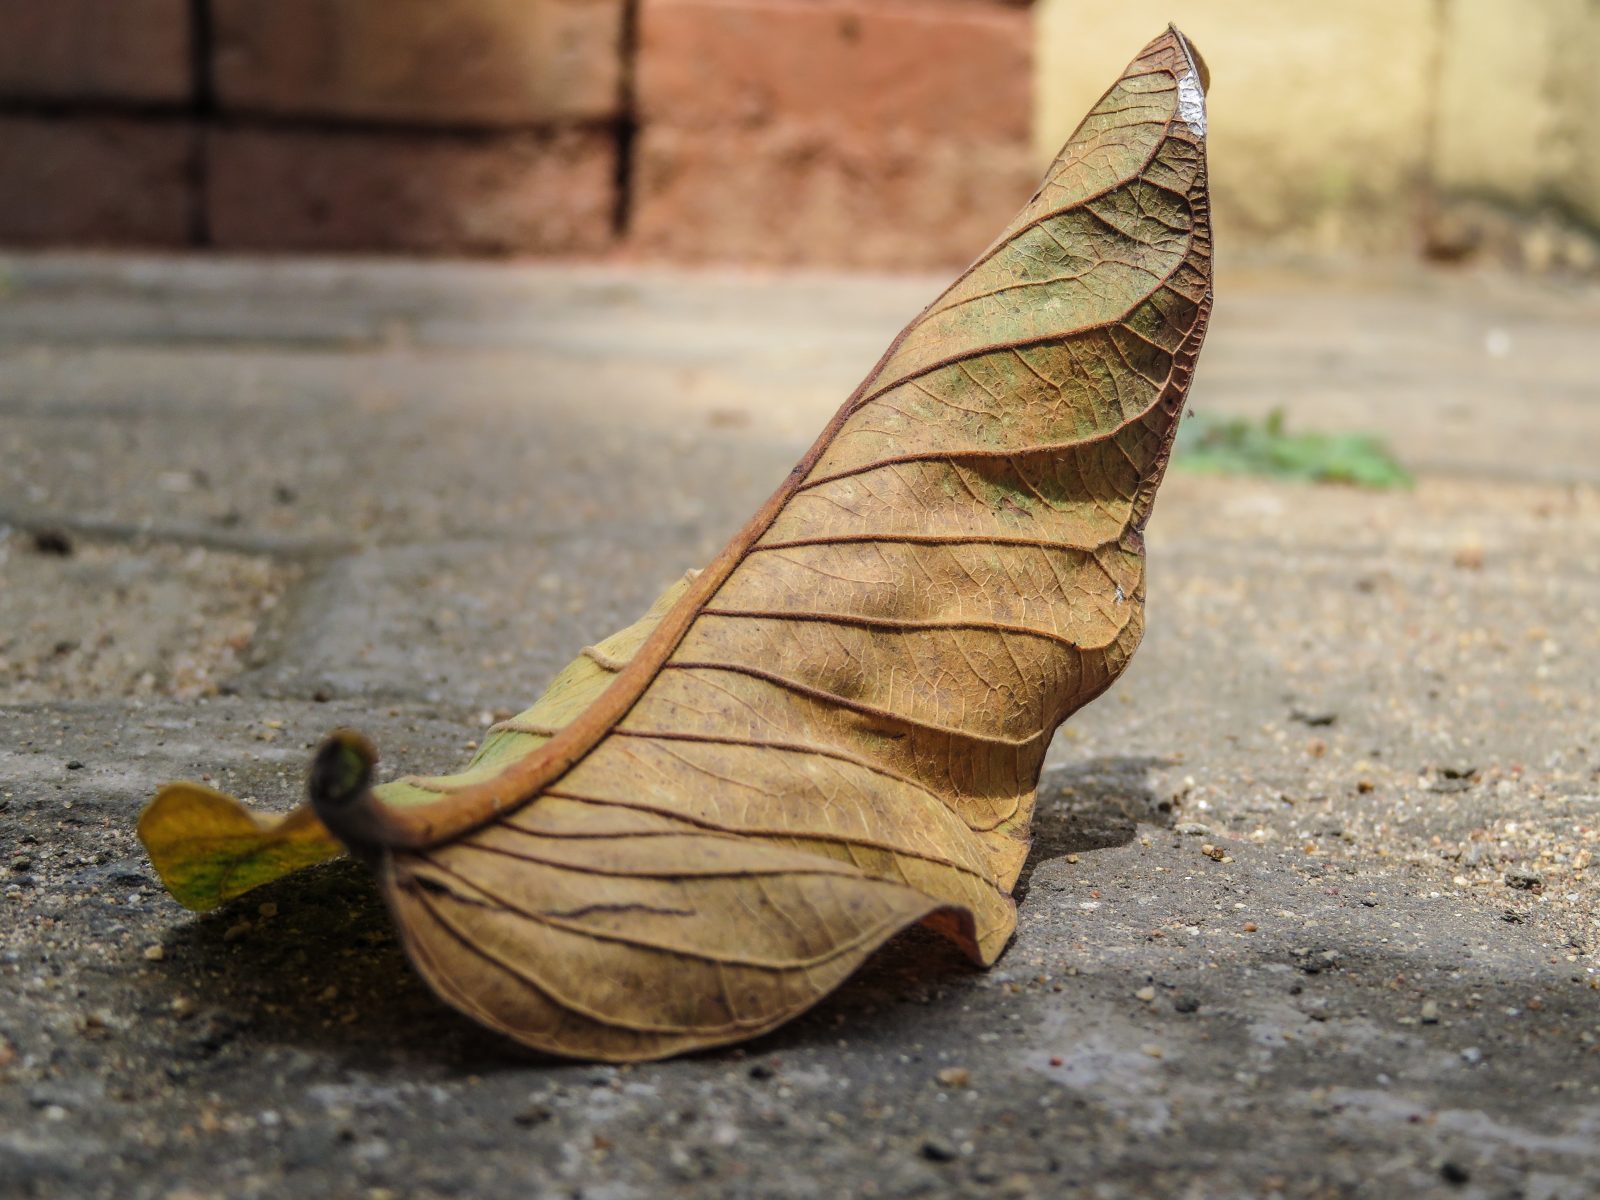 Fallen Leaf Details - Free Stock Photos | Life of Pix